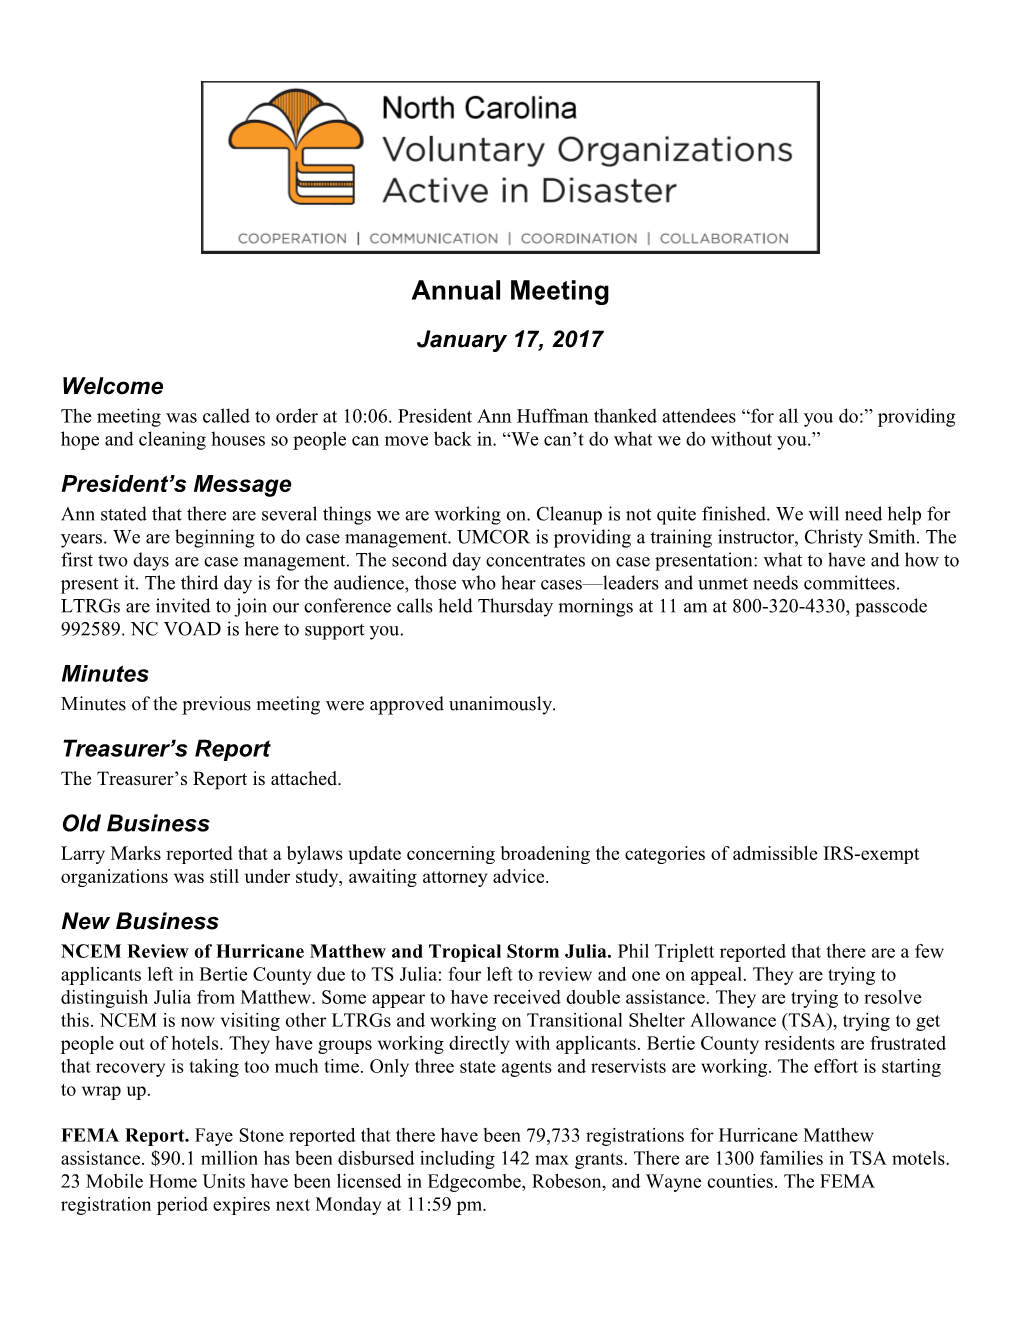 North Carolina Voluntary Organizations Active in Disaster